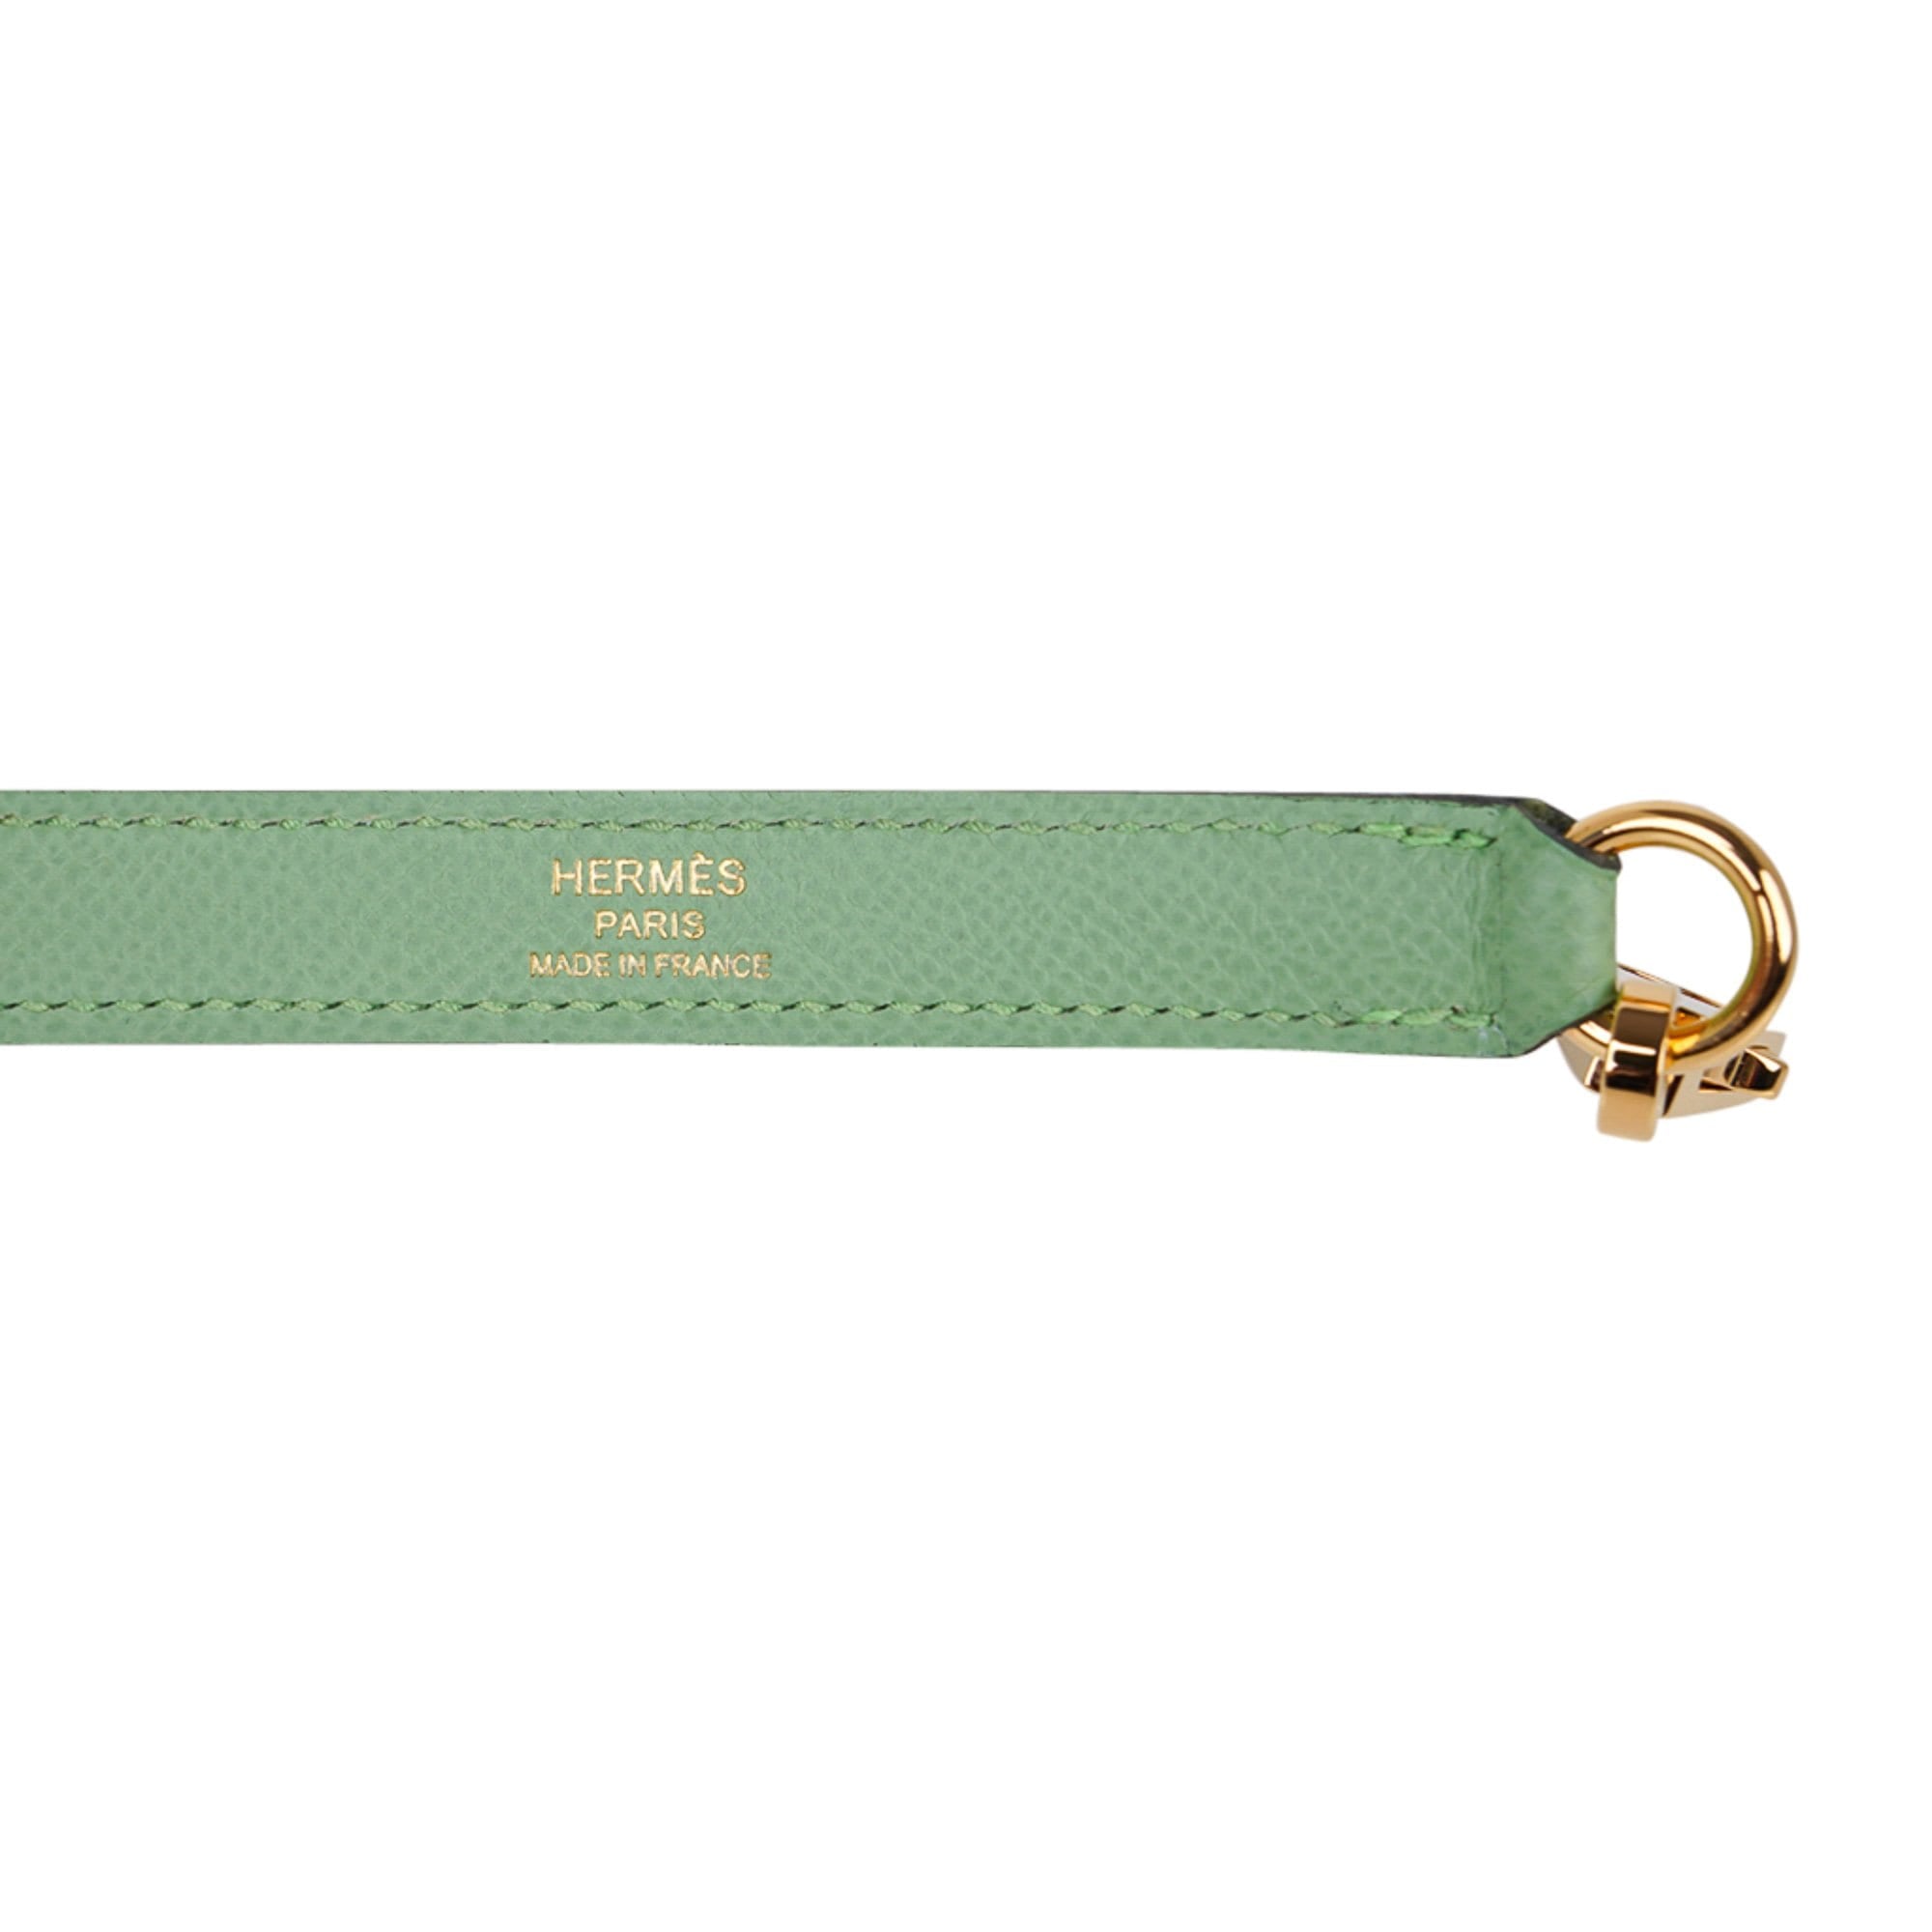 Hermès 25cm Kelly Sellier, Vert Criquet Epsom Leather, Gold Hardware, 2020/Y 🗝 #hermes #priveporter #kellysellier #vertcriquet #birkin